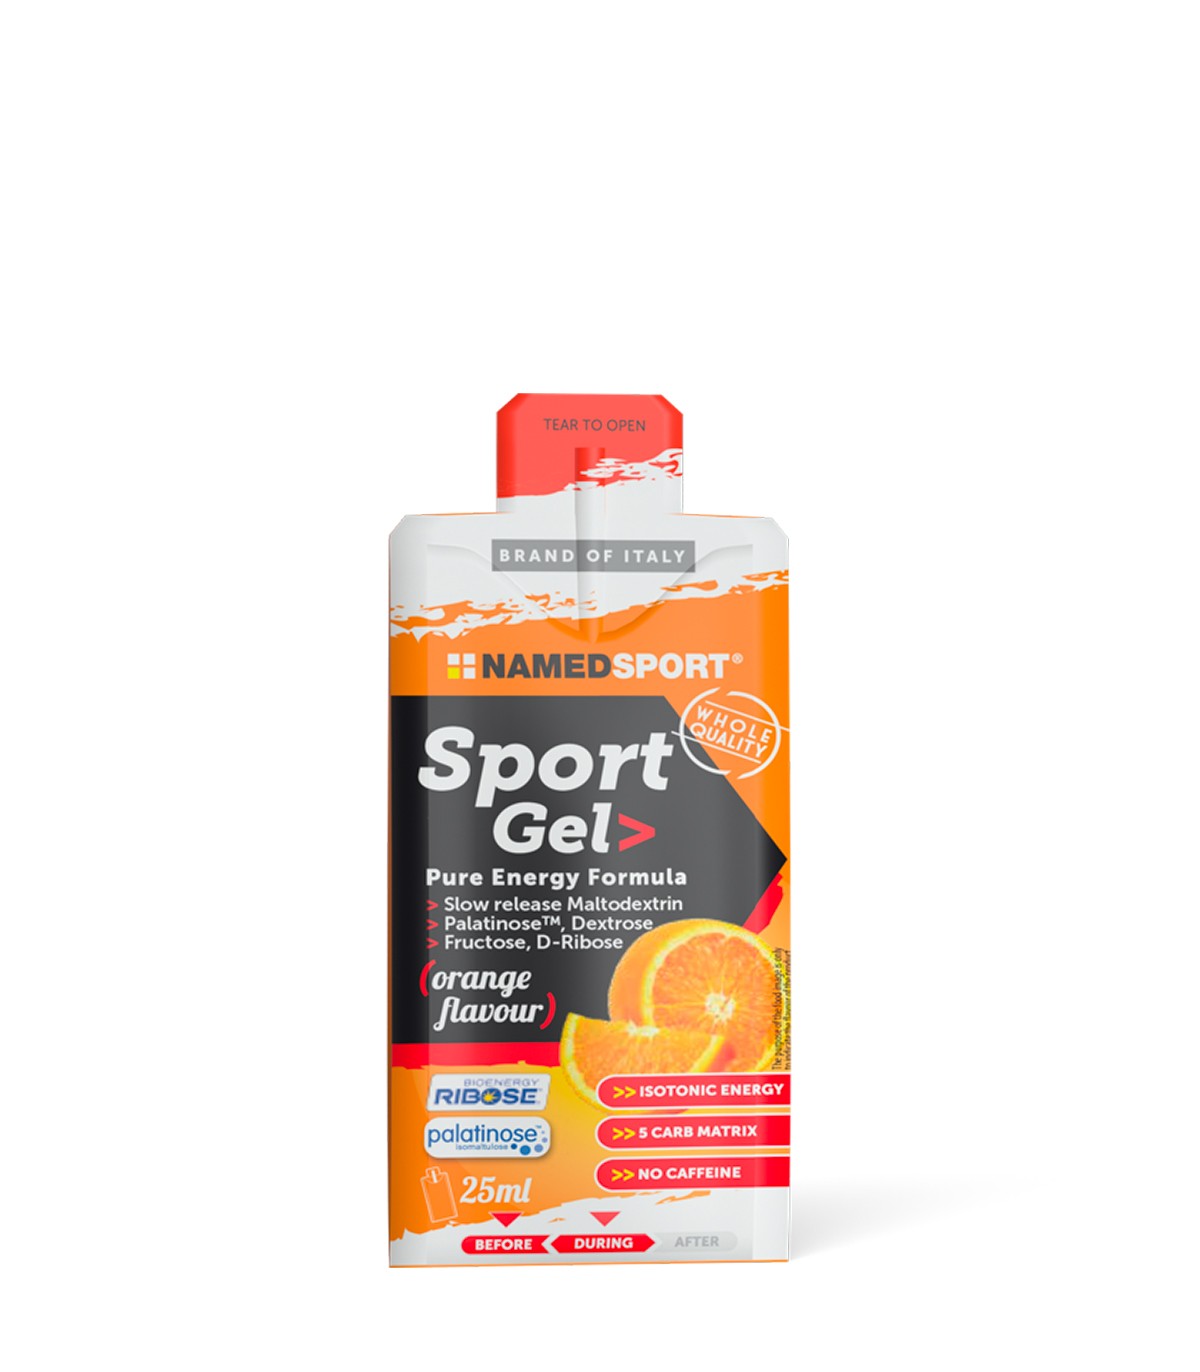 Sport Gel (25ml) NAMED SPORT Gusto Sport Orange